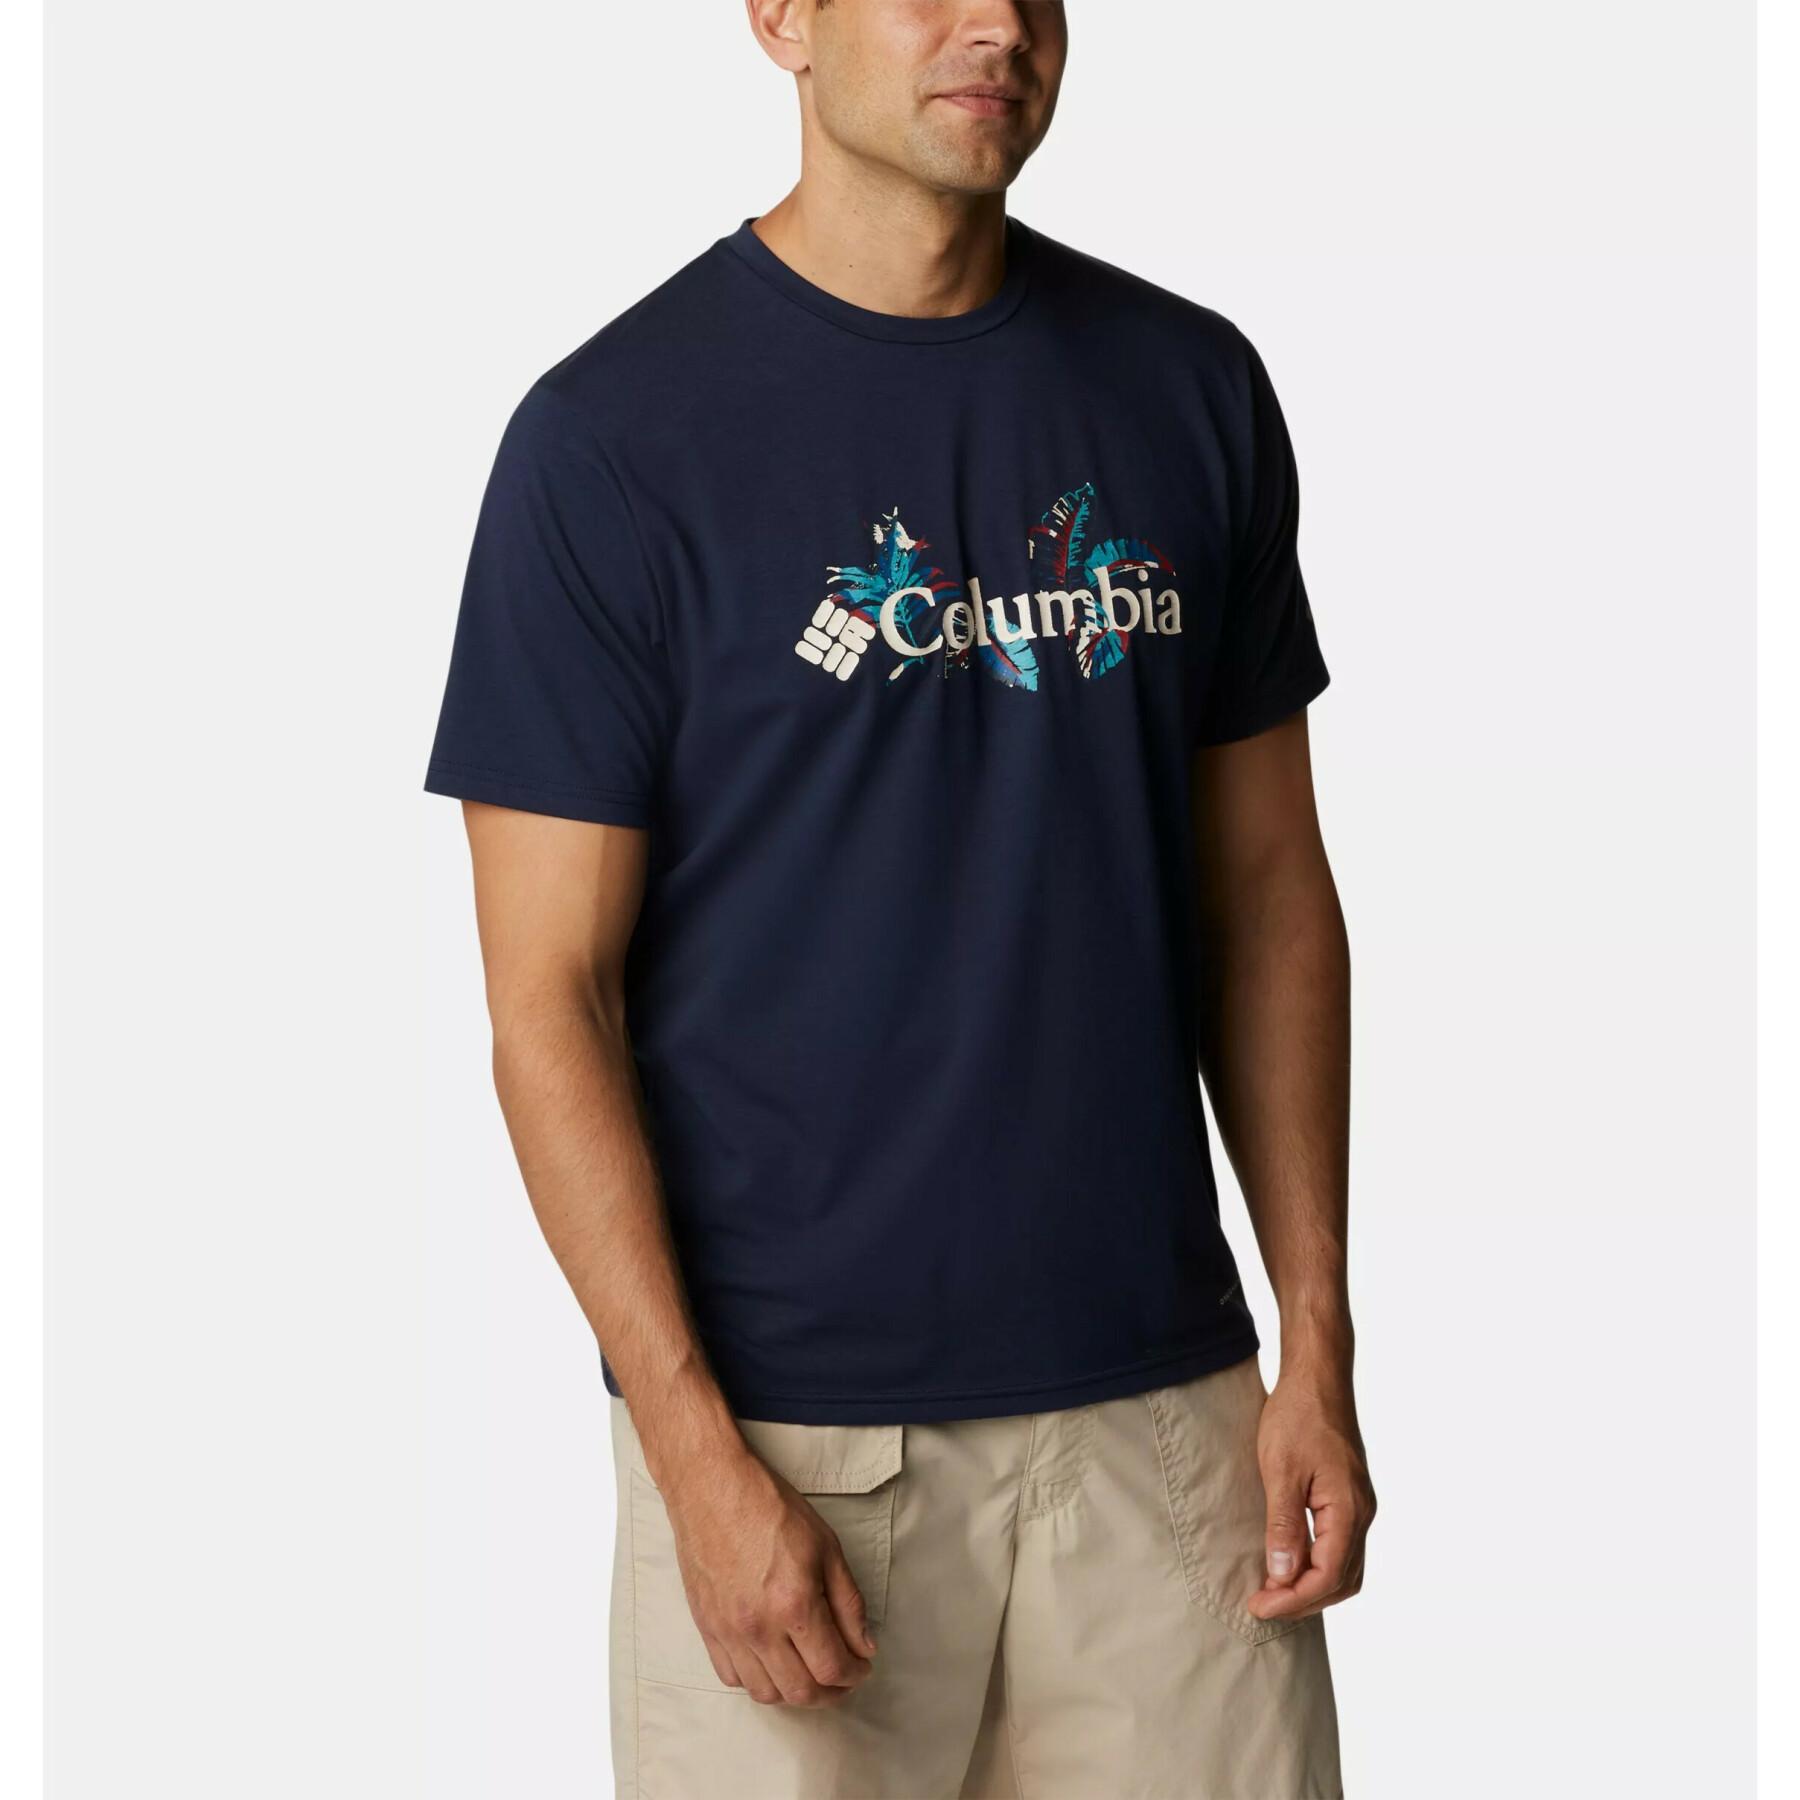 Camiseta Columbia Sun Trek Sleeve Graphic